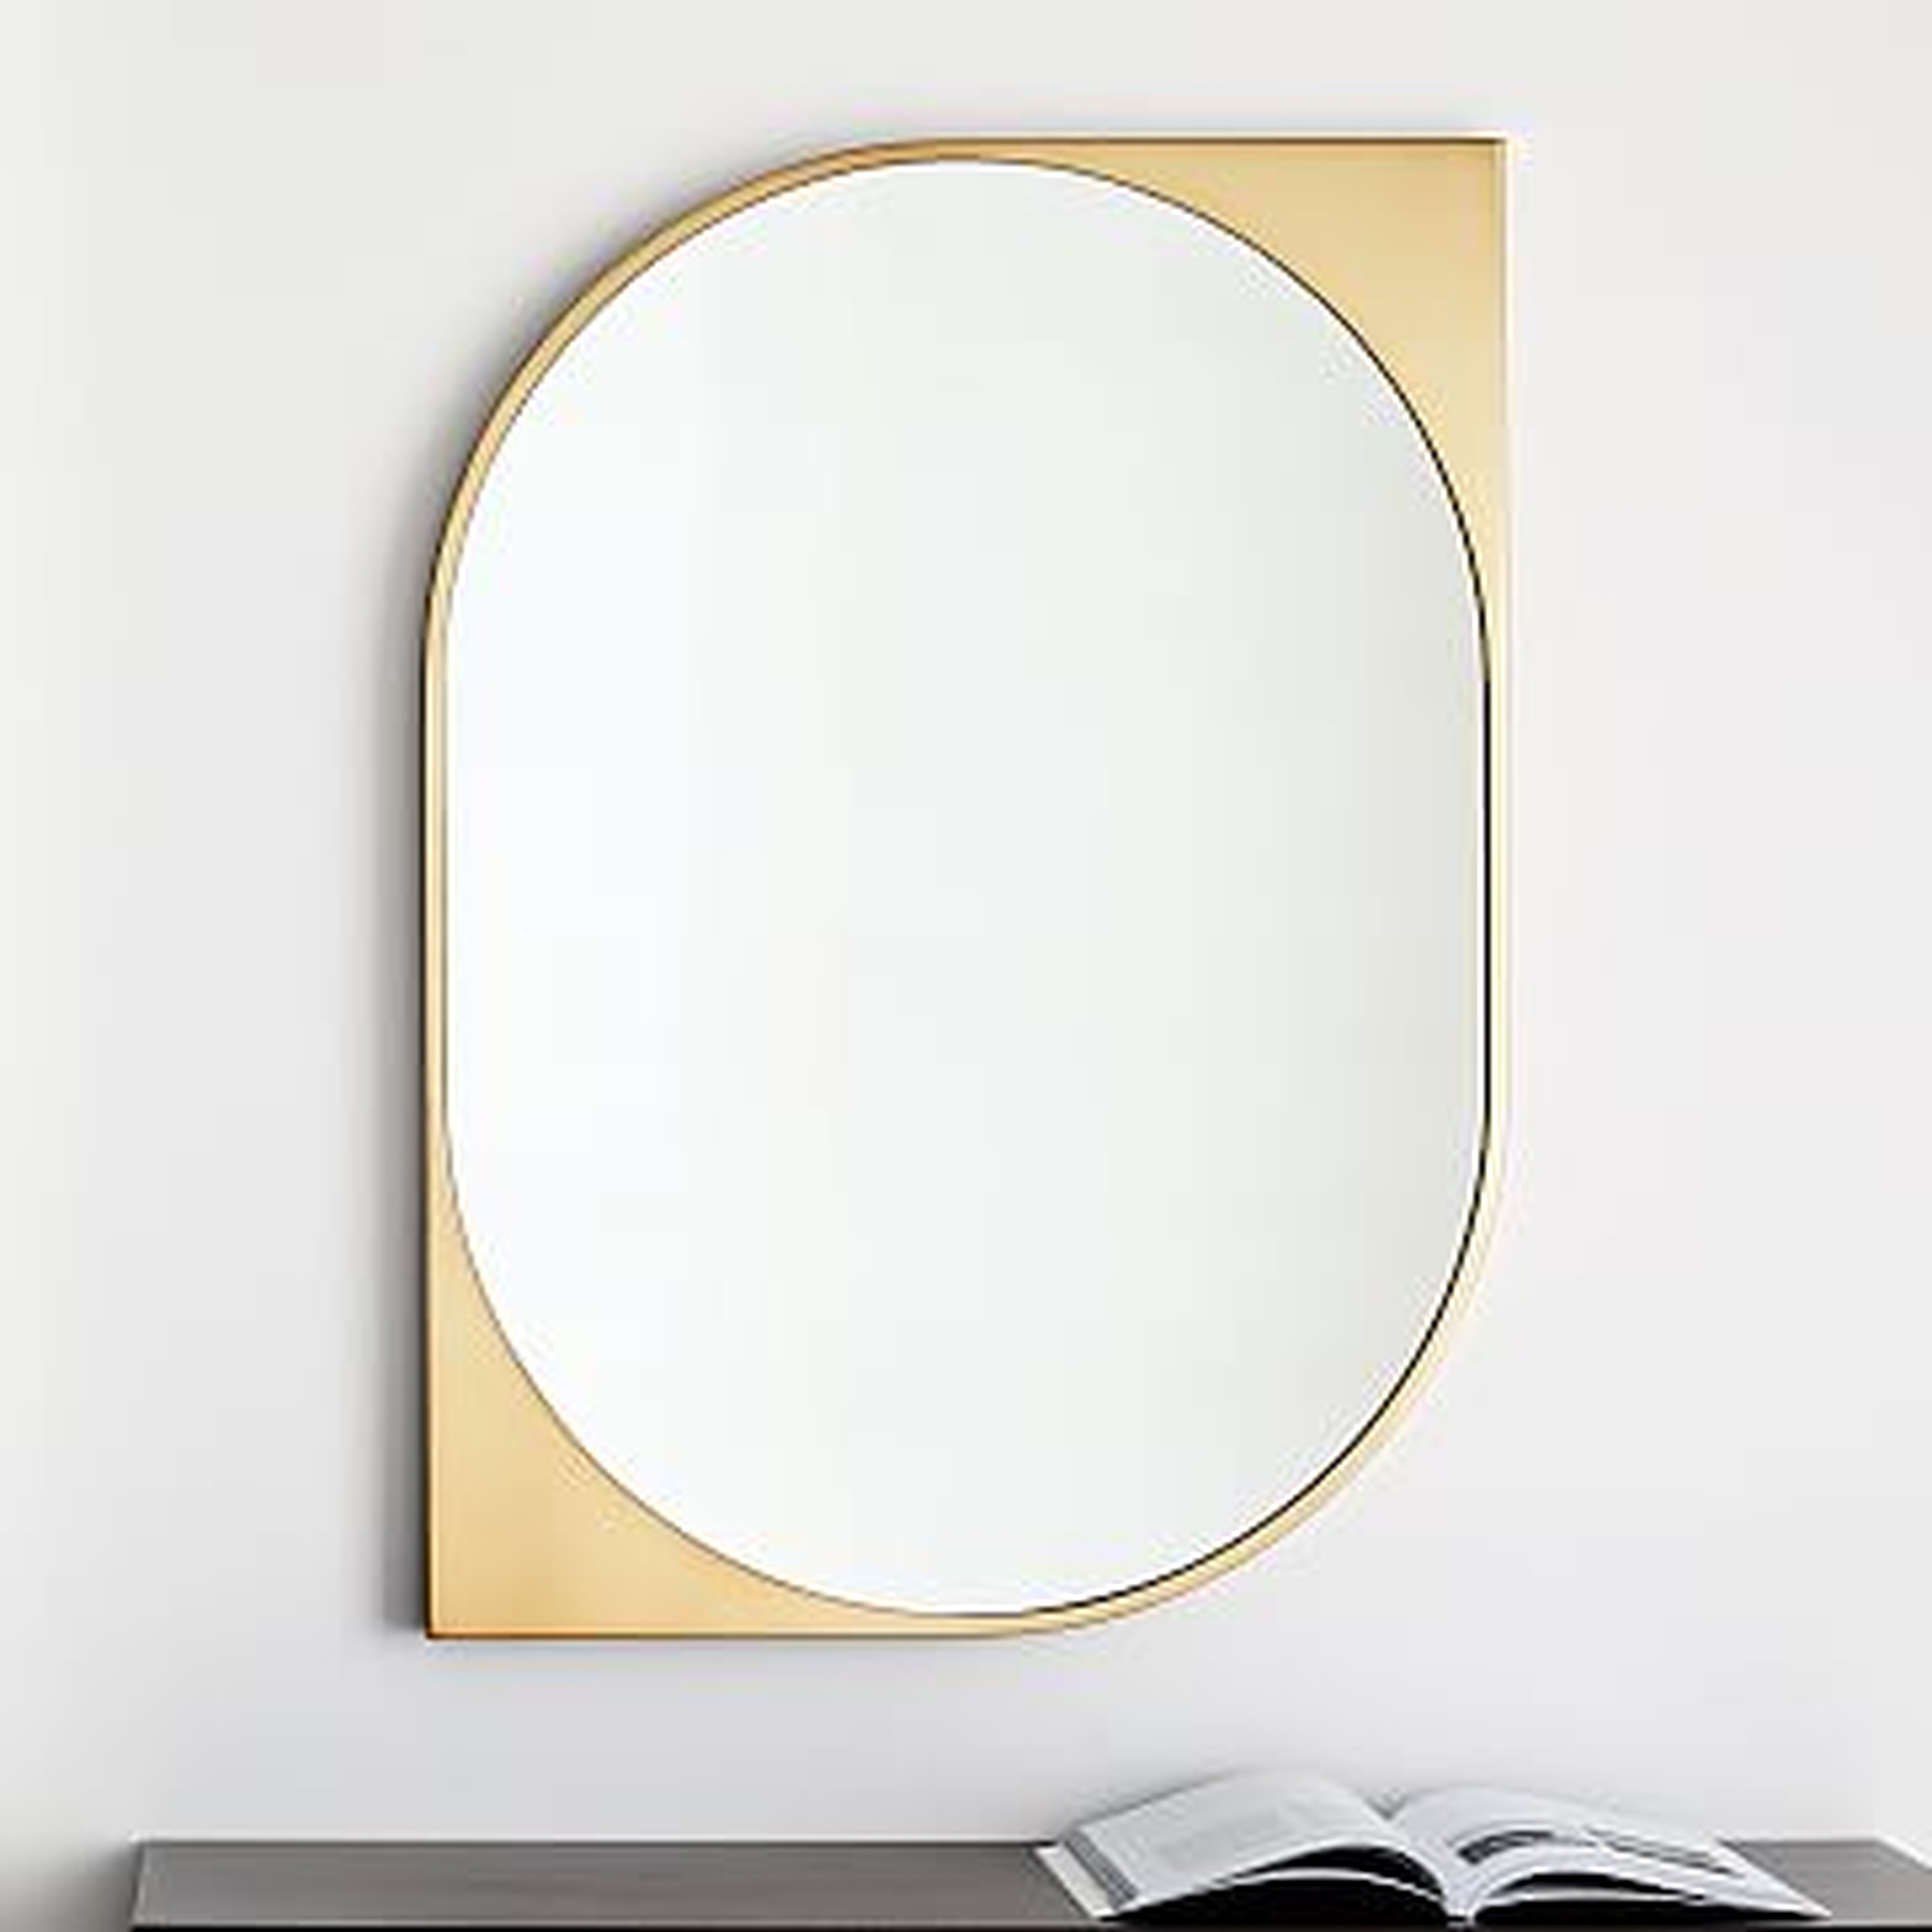 Cateye Metal Wall Mirror, Antique Brass - West Elm